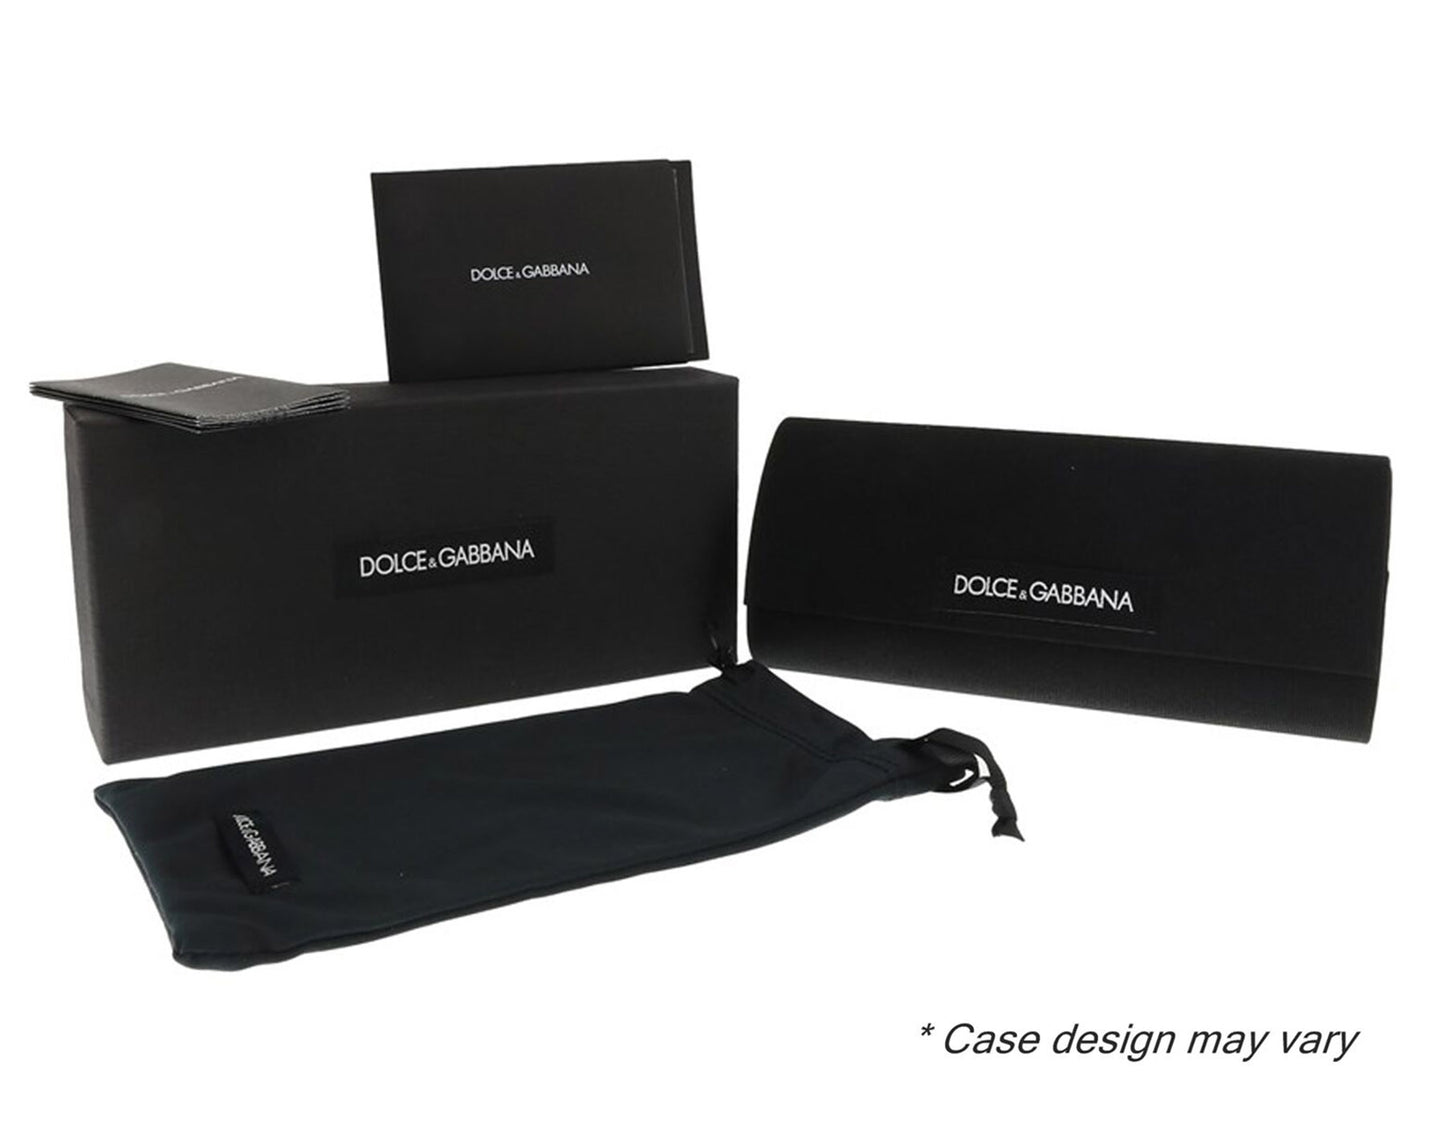 Dolce & Gabbana 0DG4414-501/8G 54mm New Sunglasses